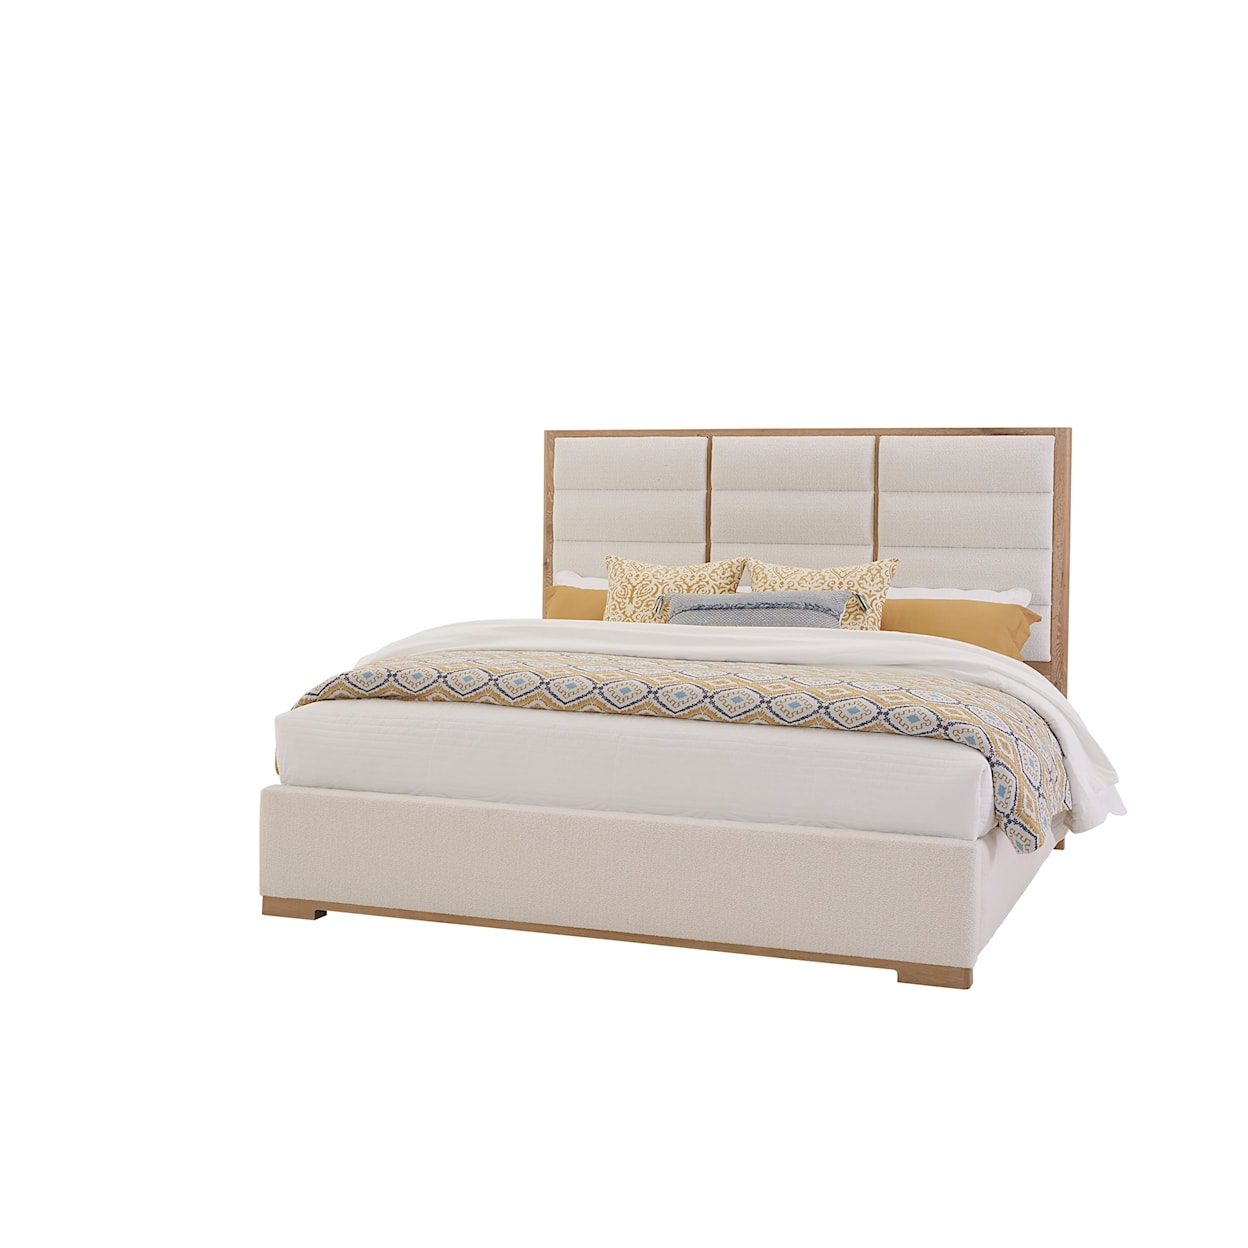 Vaughan-Bassett Charter Oak Upholstered Queen Bedroom Set